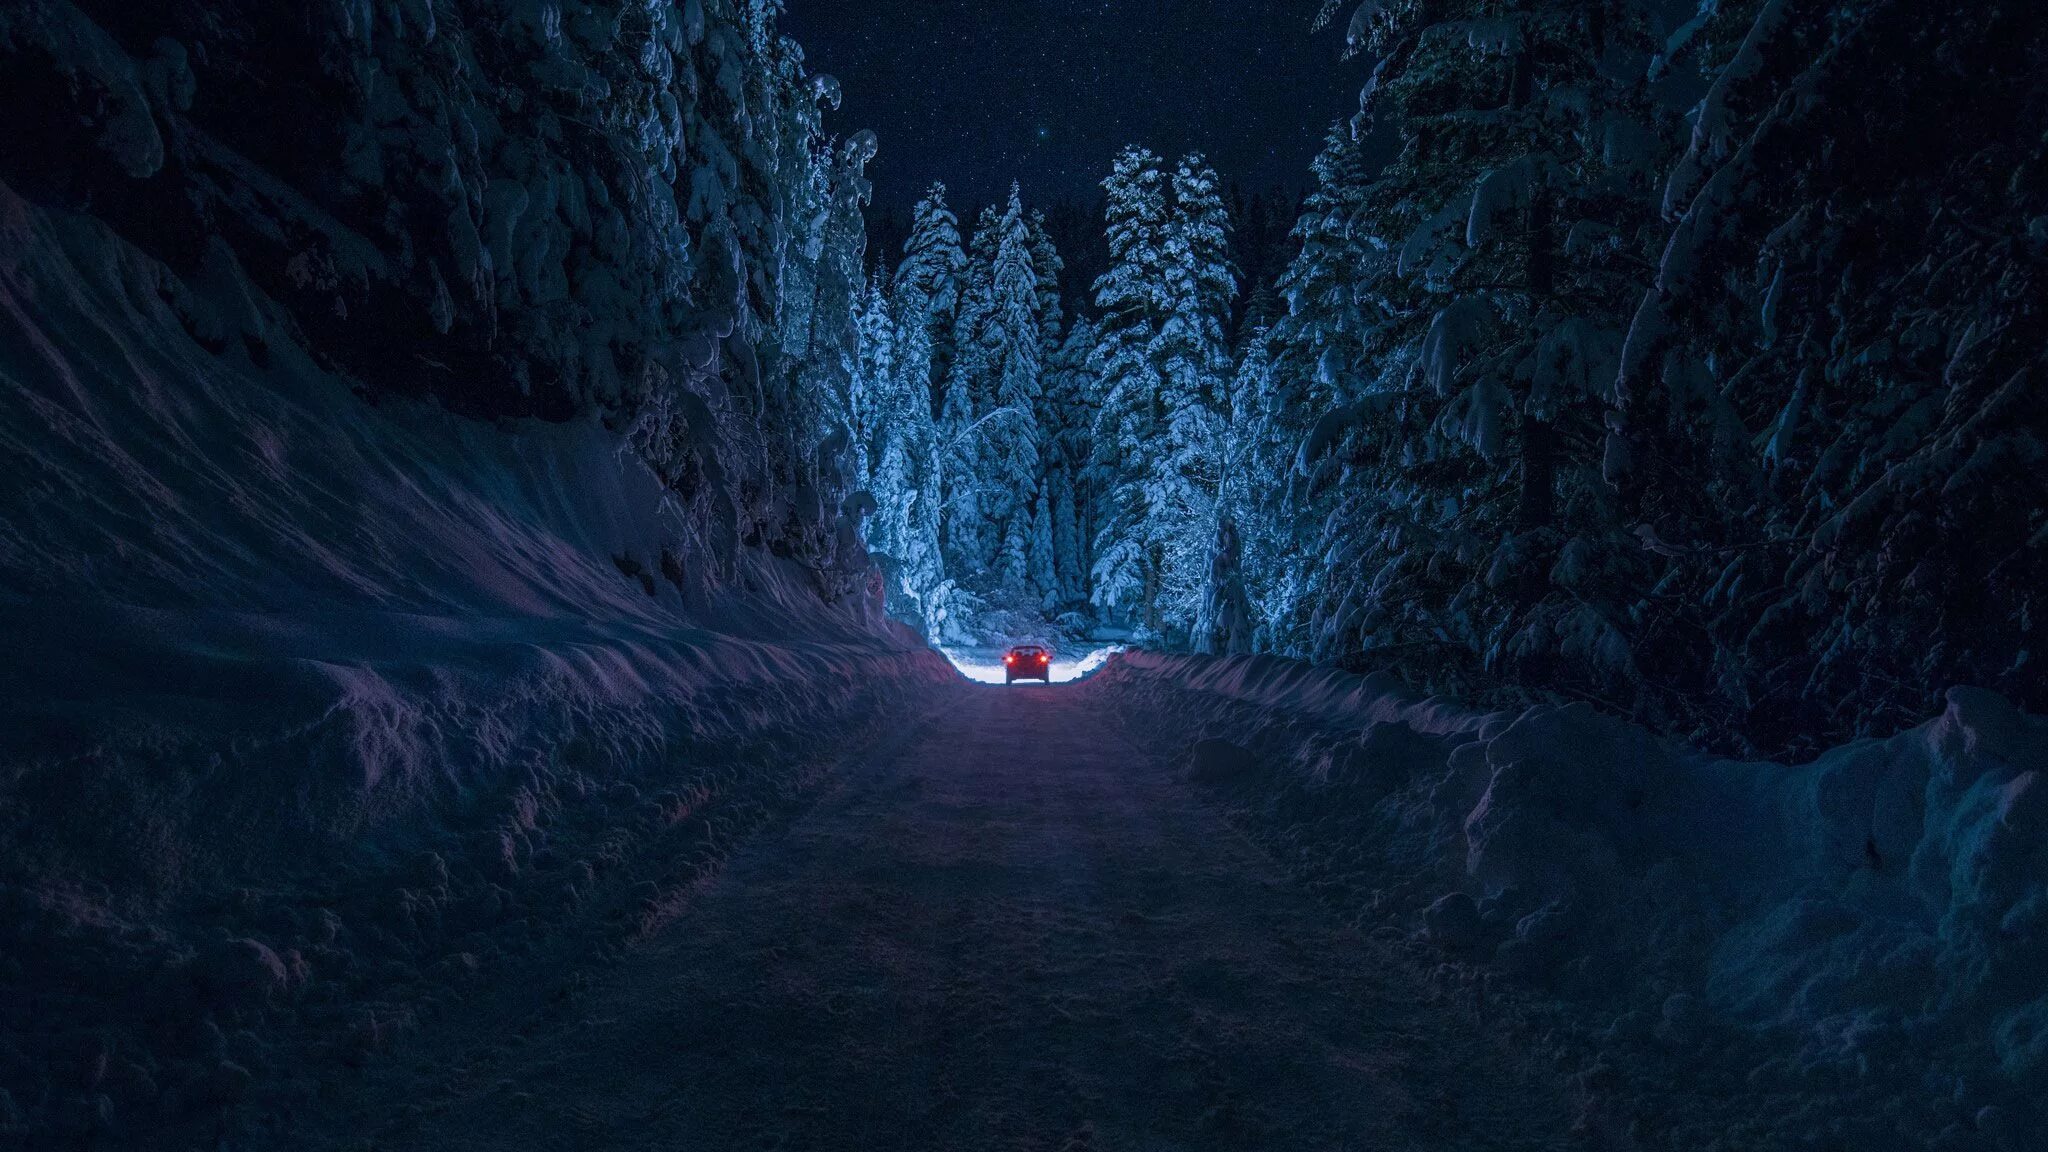 Light in the dark 2. Зимний лес ночью. Заснеженный лес ночью. Дорога зима ночь. Зимняя дорога ночью.